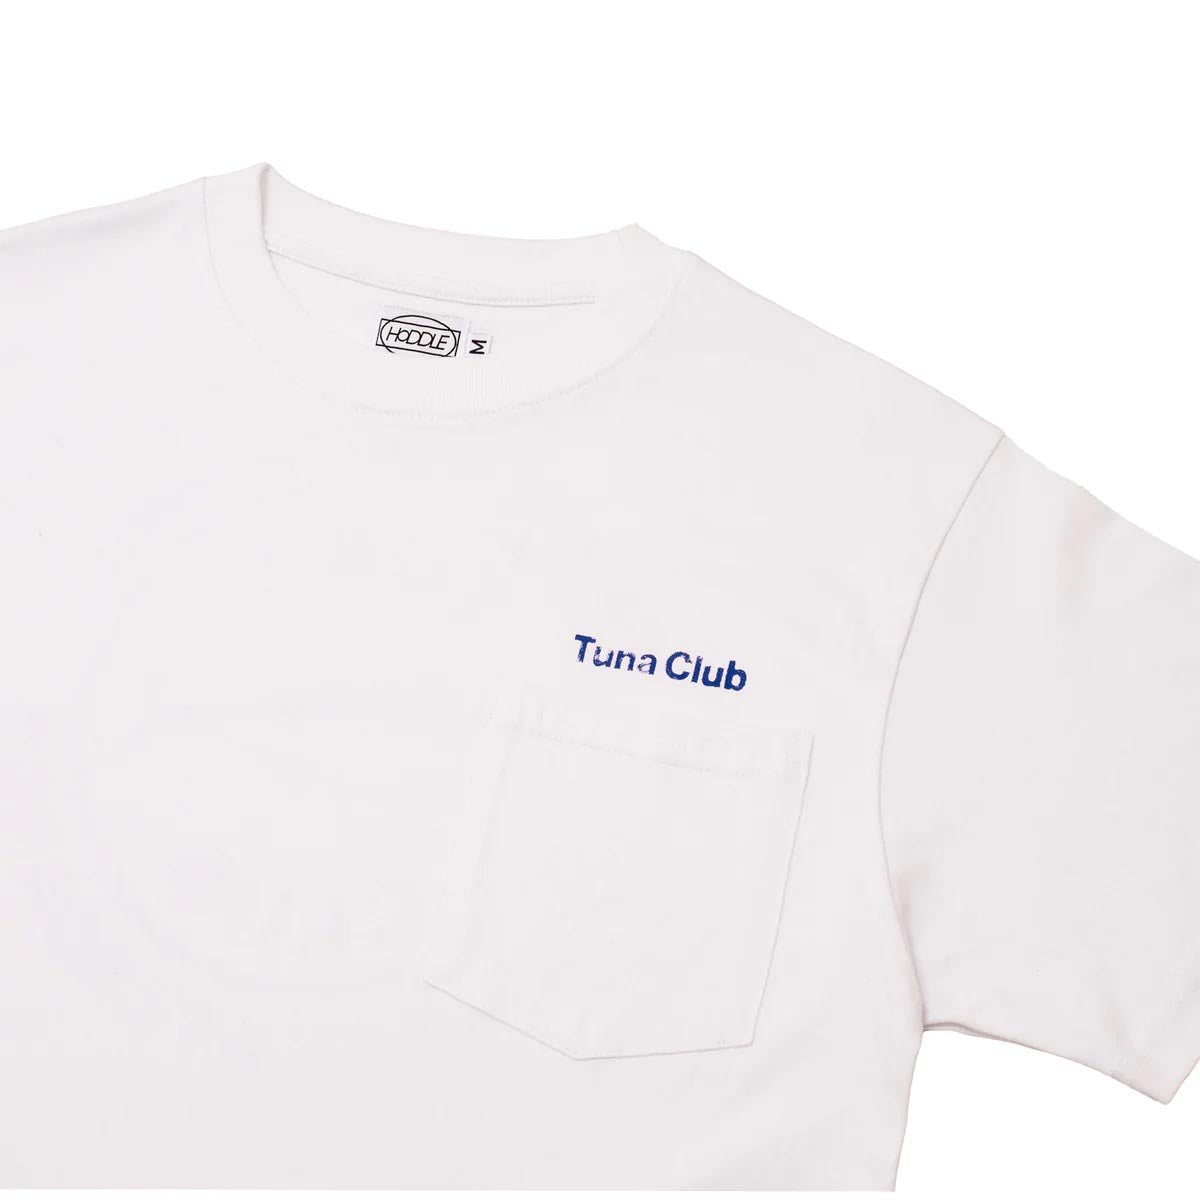 Hoddle Tuna Club T-Shirt - White image 4